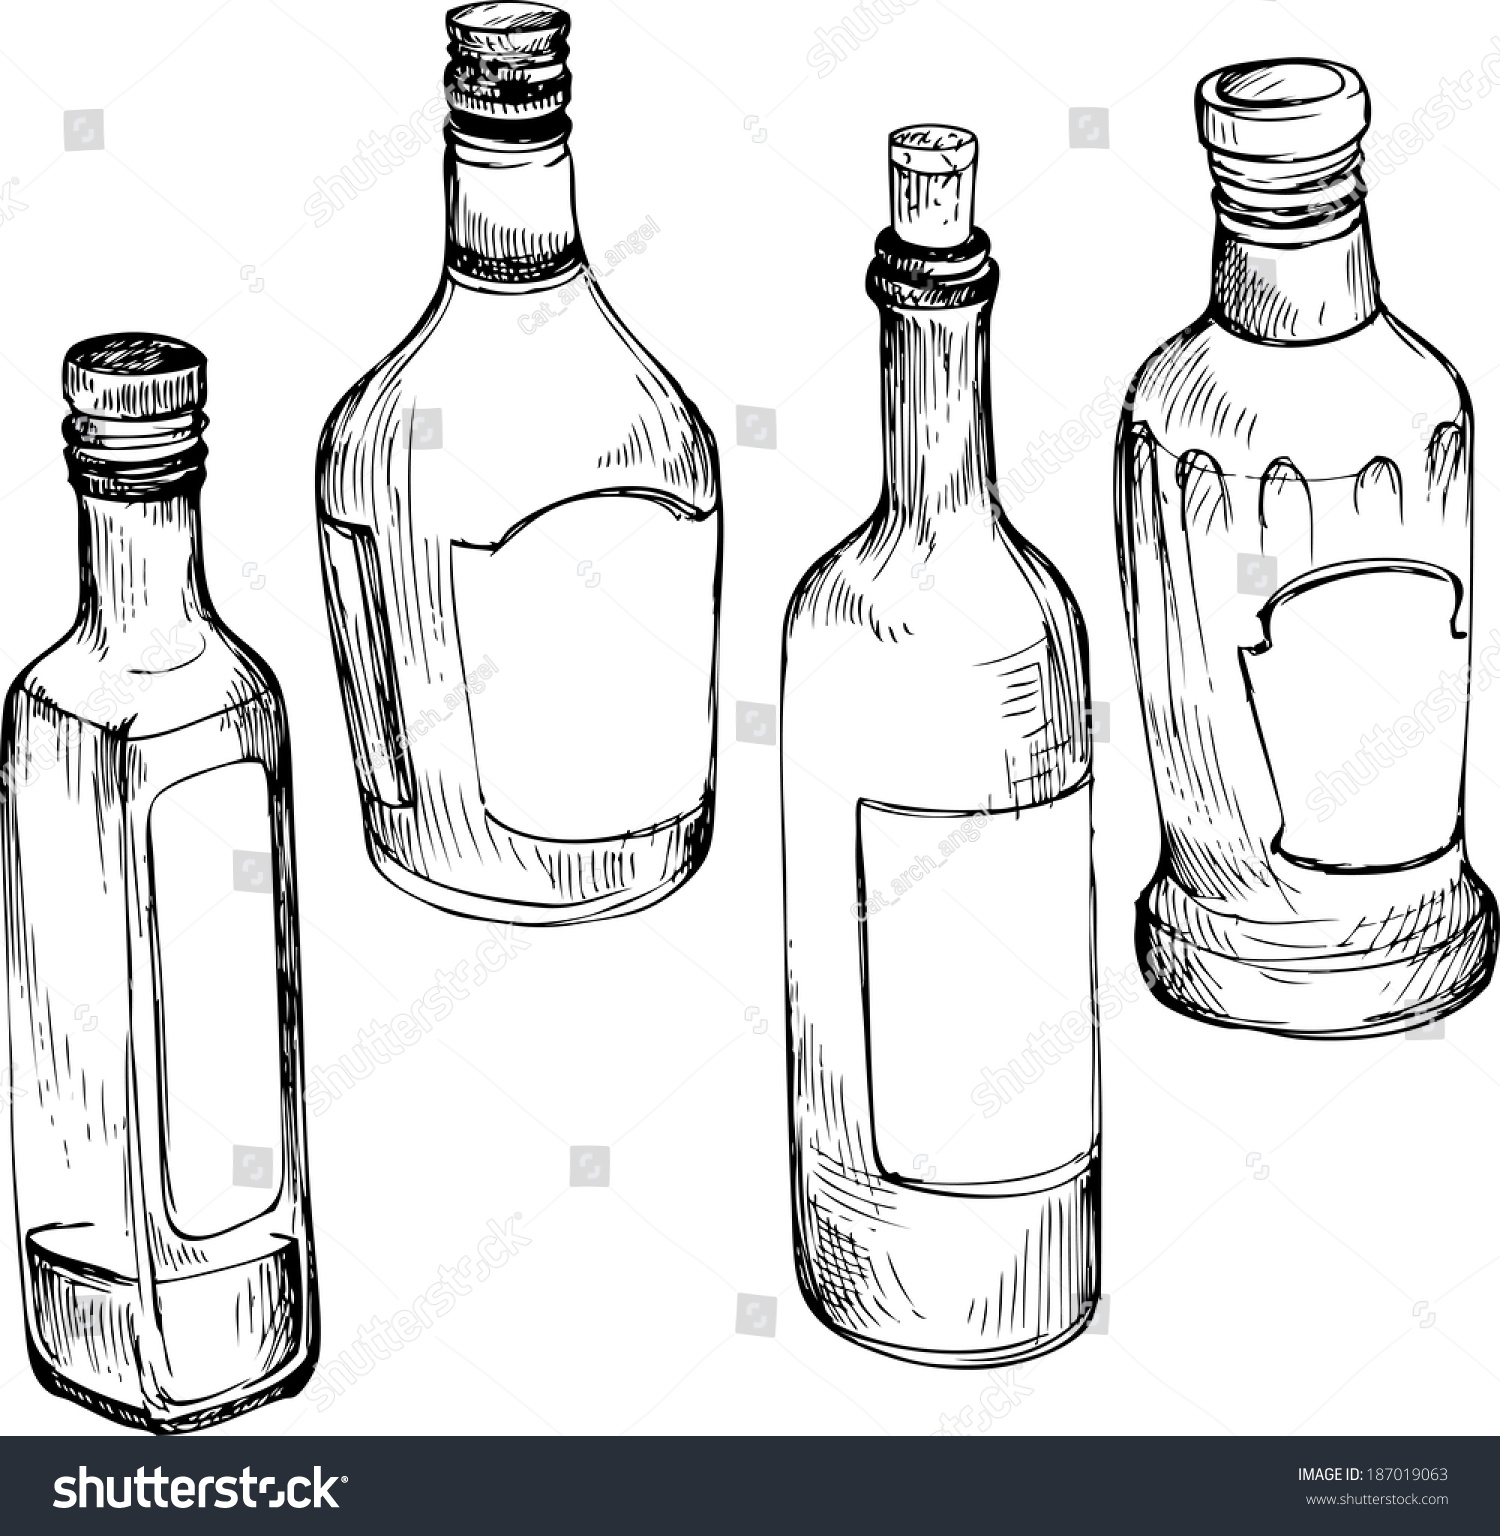 Set Hand Drawn Glass Bottles Sketch Stock Vector 187019063 - Shutterstock